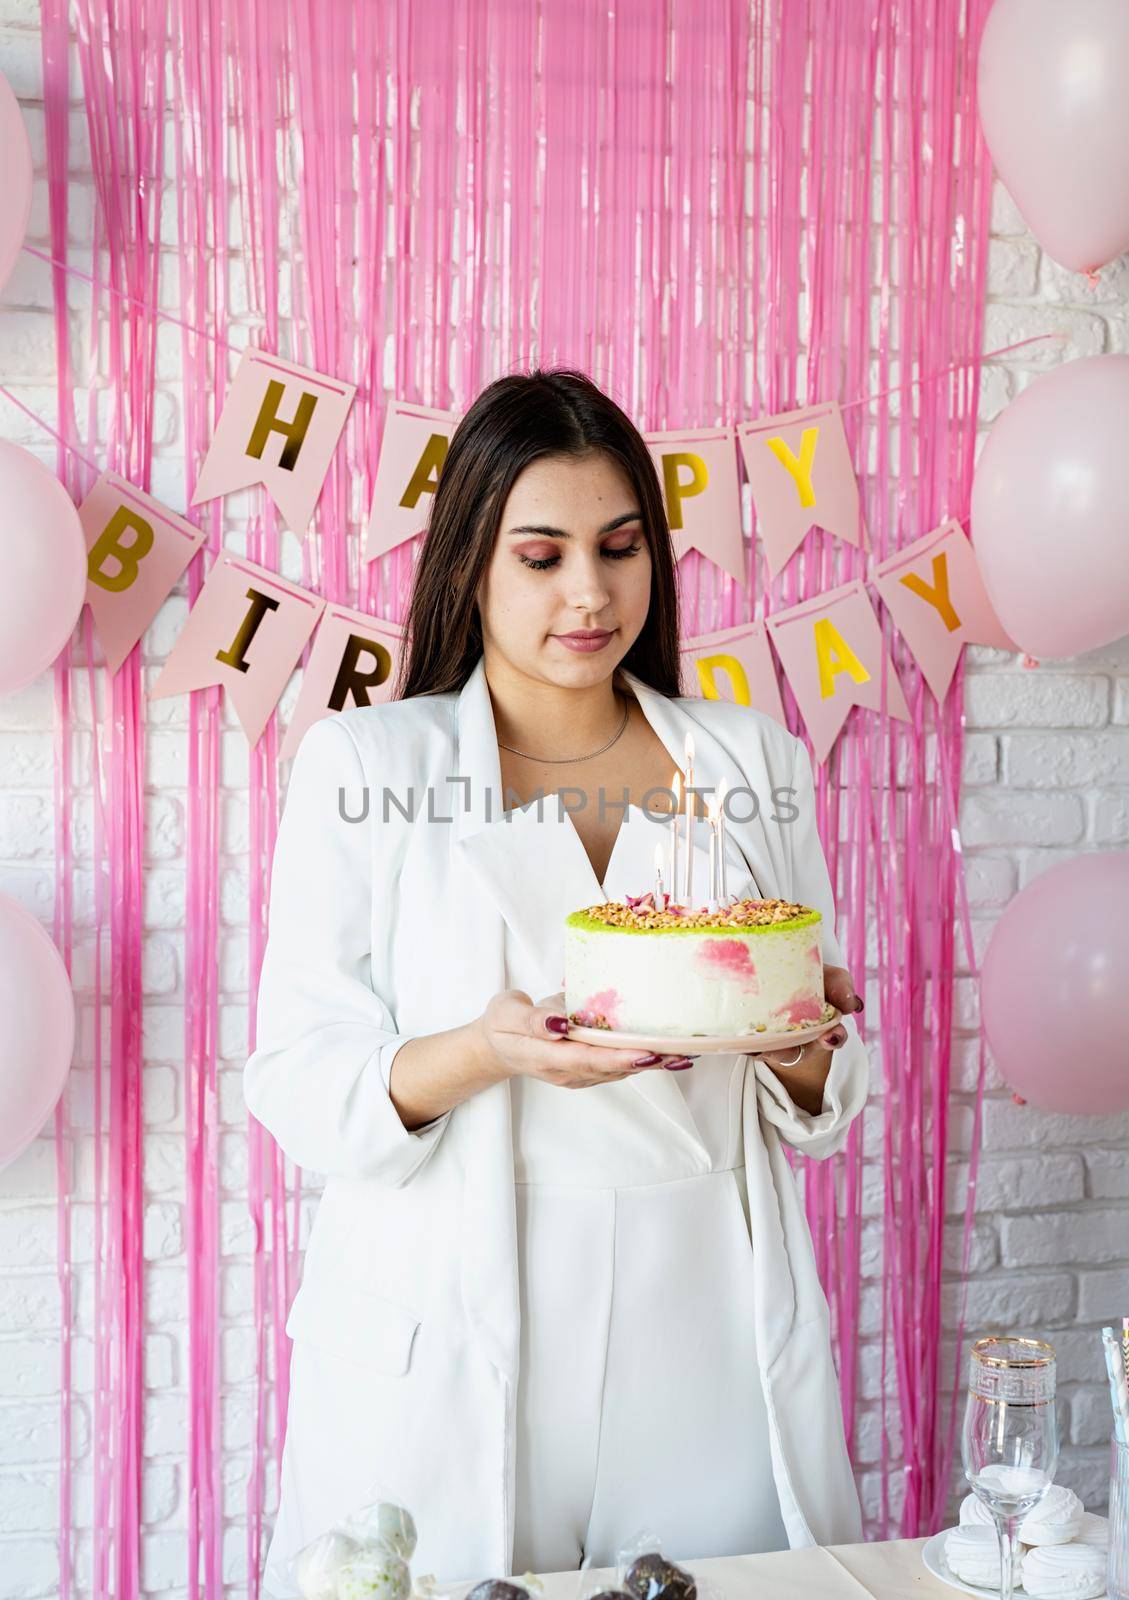 Beautiful woman celebrating birthday party holding a cake by Desperada